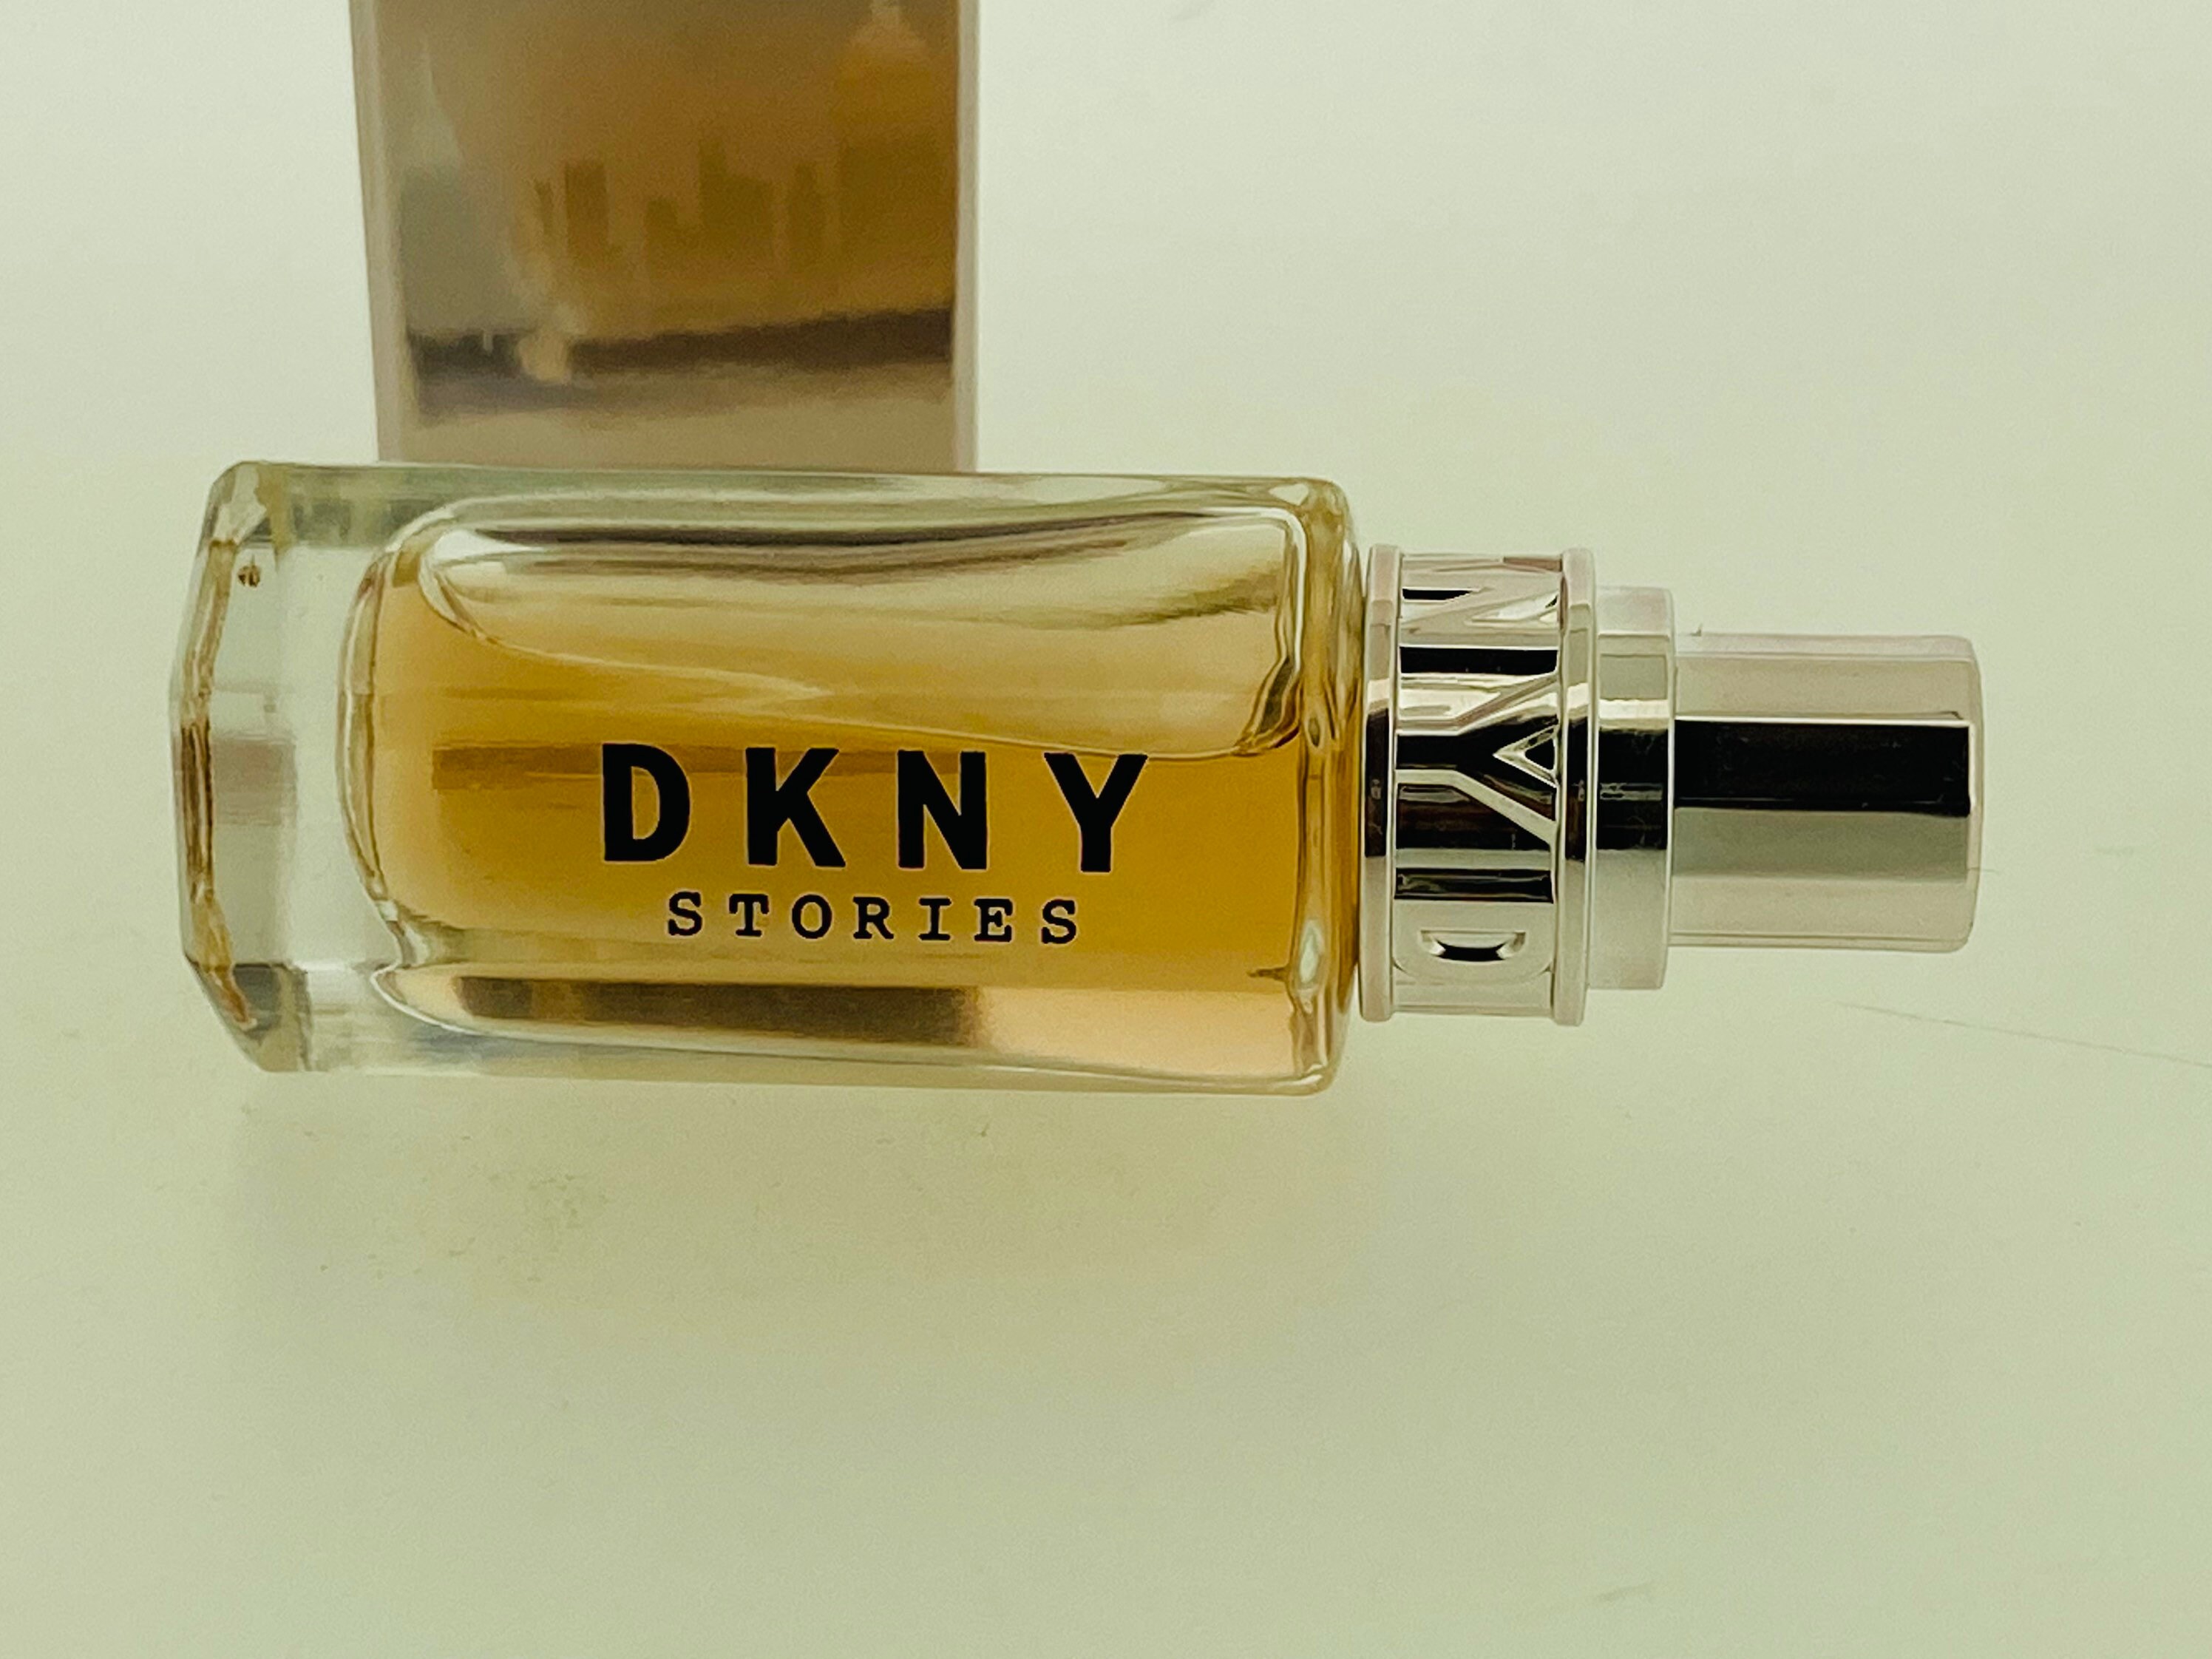 DKNY Stories Donna Karan 2018 EAU de PARFUM miniatuur 4 ml